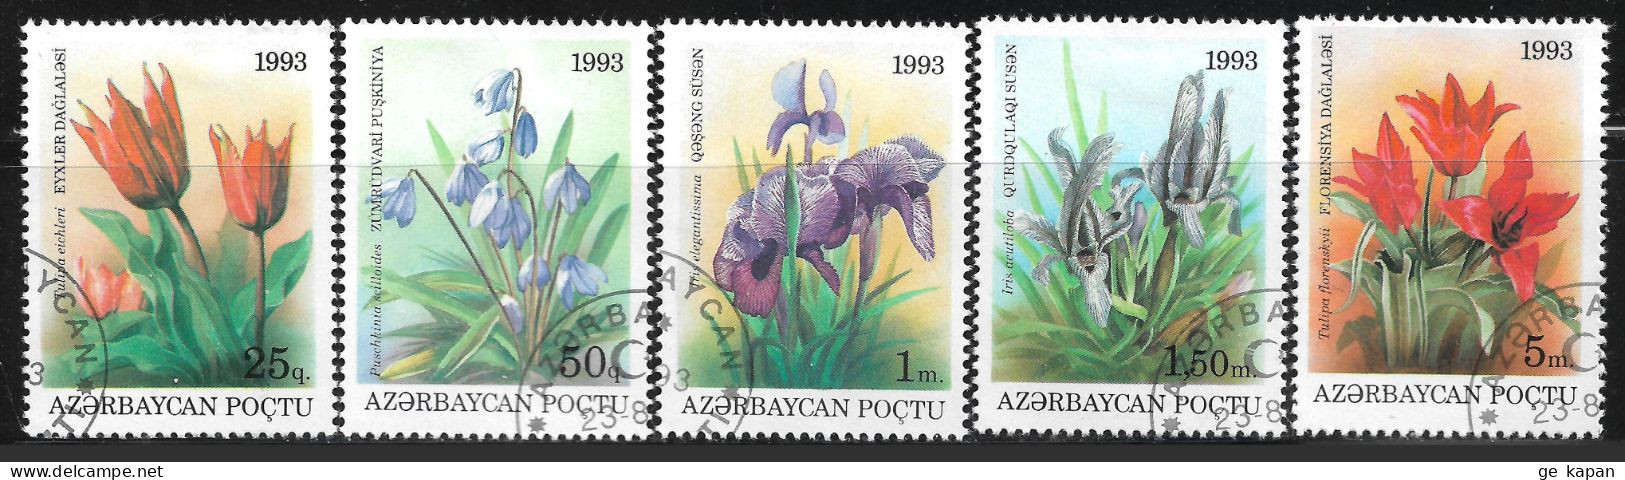 1993 AZERBAJAN Set Of 5 Used STAMPS (Michel # 91-95) - Azerbaïjan